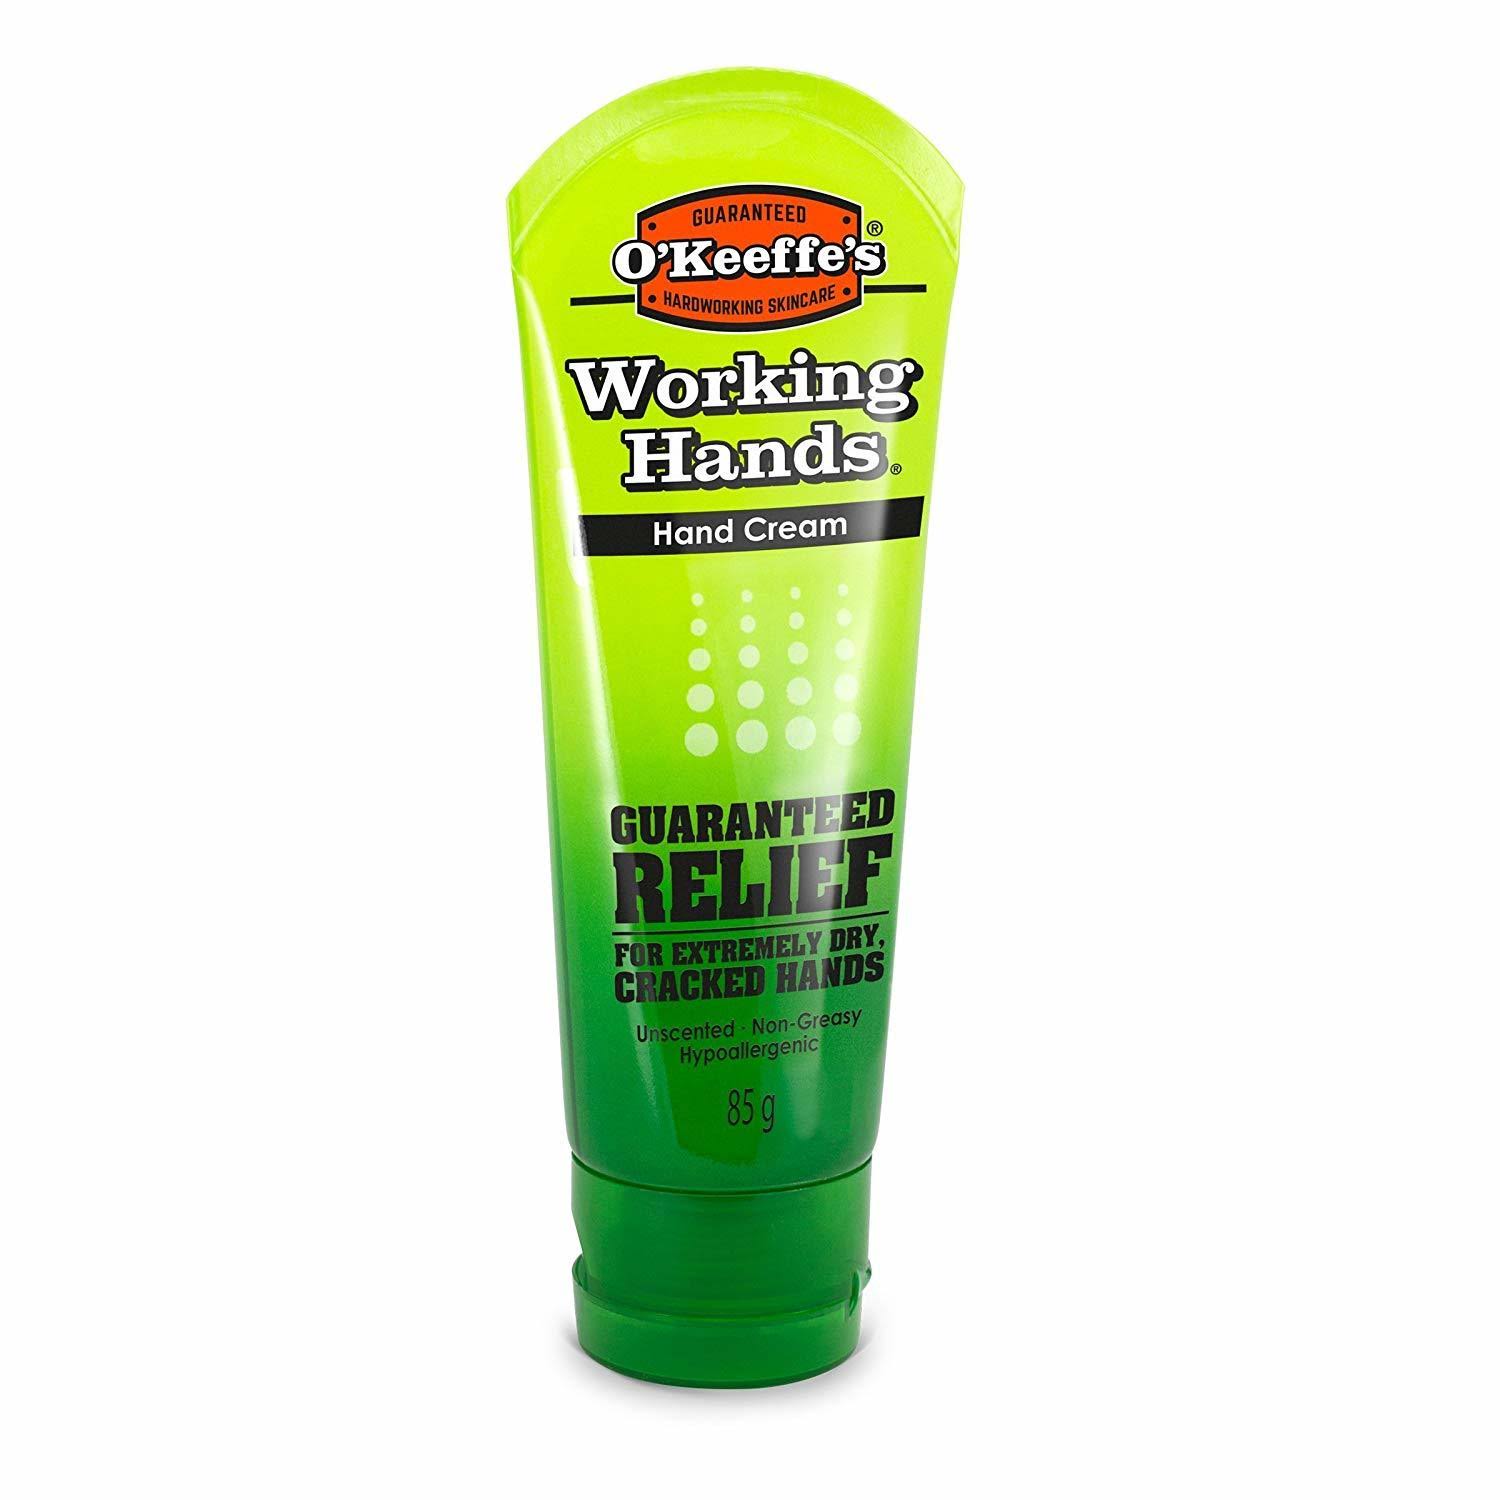 O'Keeffe's working Hands Hand Cream - 85g Tube